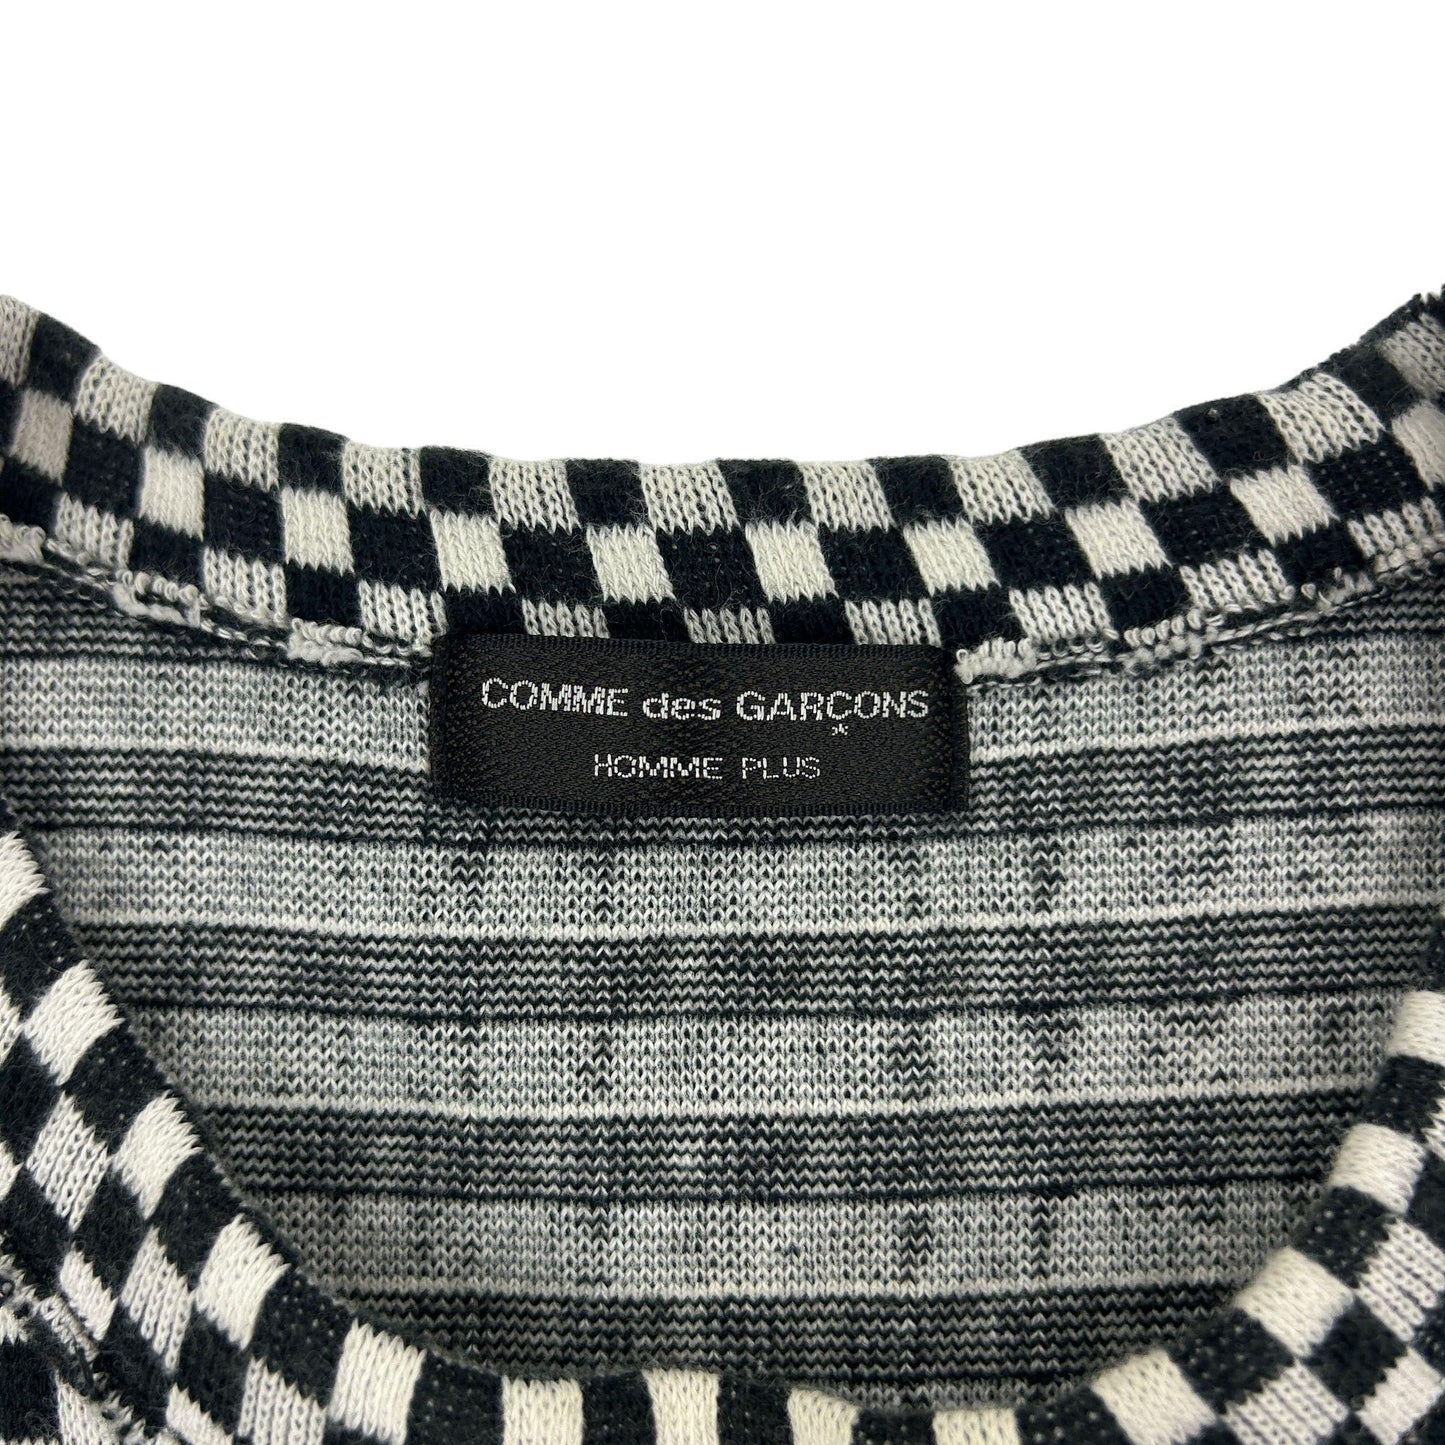 Vintage Comme Des Garcons HOMME PLUS Checkerboard Jumper Size S - Known Source